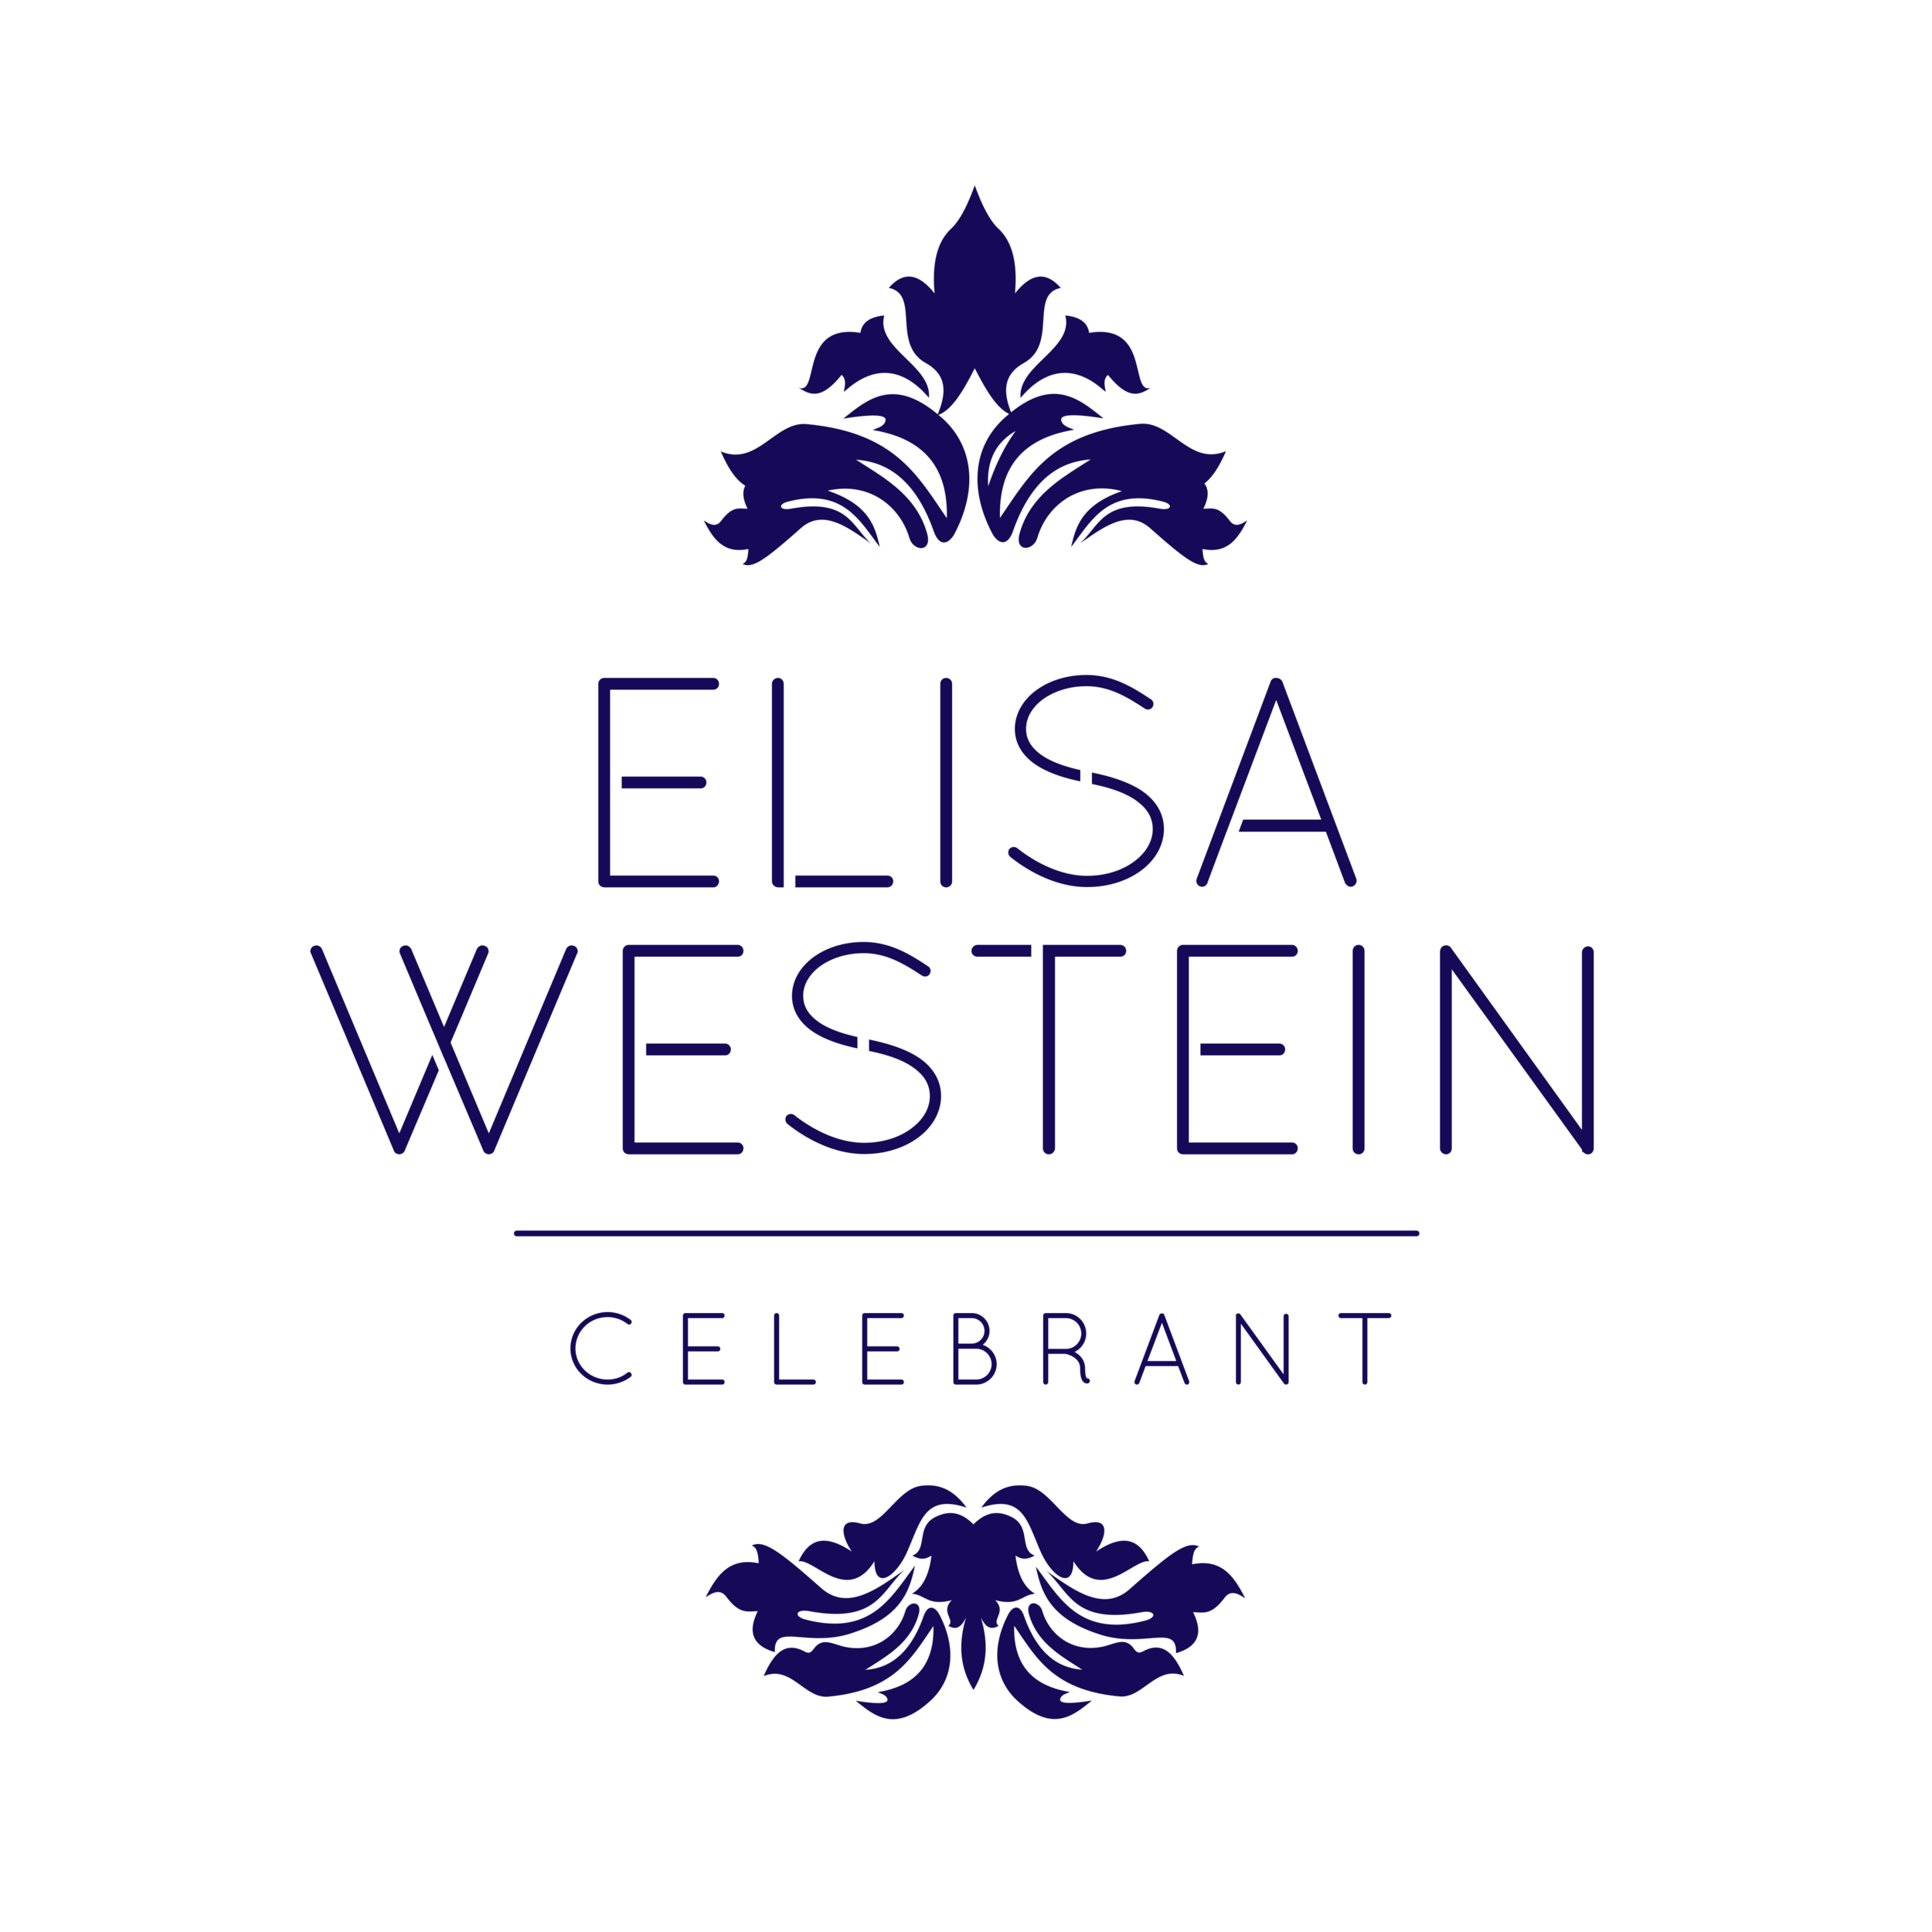 Elisa Westein Celebrant